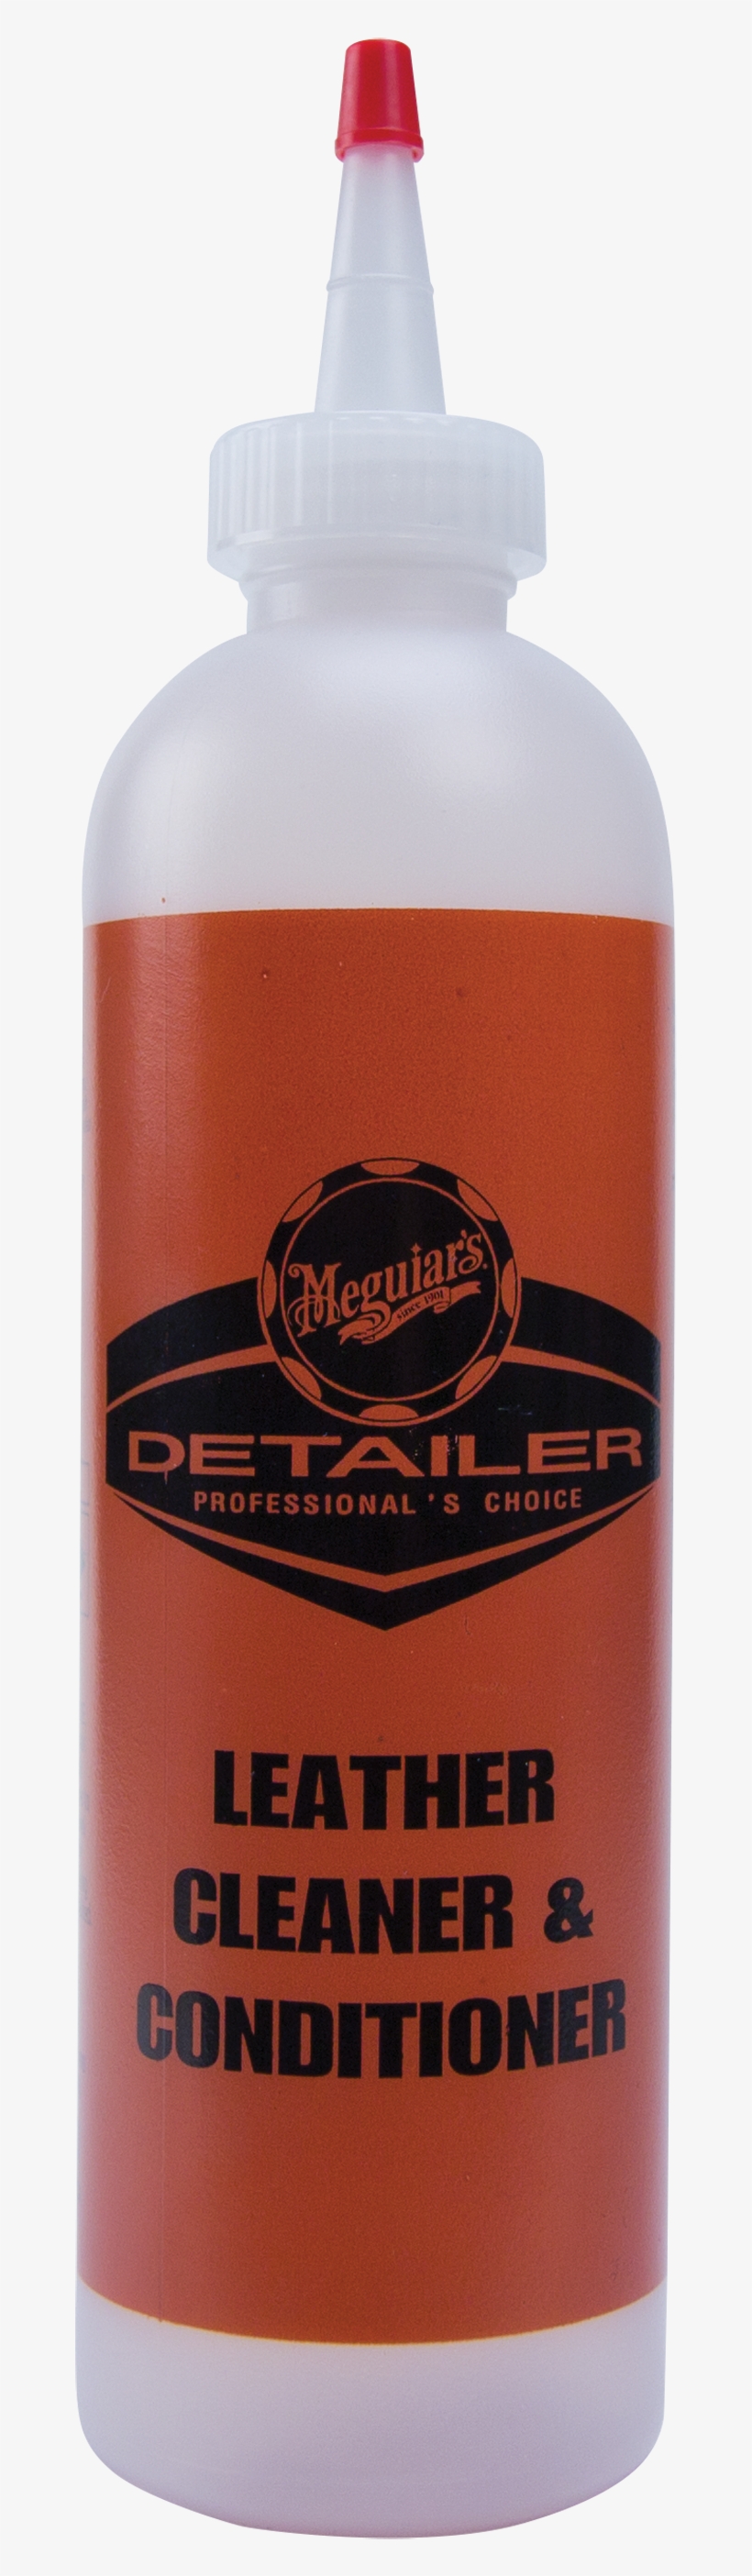 Leather Cleaner & Conditioner Bottle - Meguiar's D20180 Leather Cleaner And Conditioner Bottle, transparent png #5301084